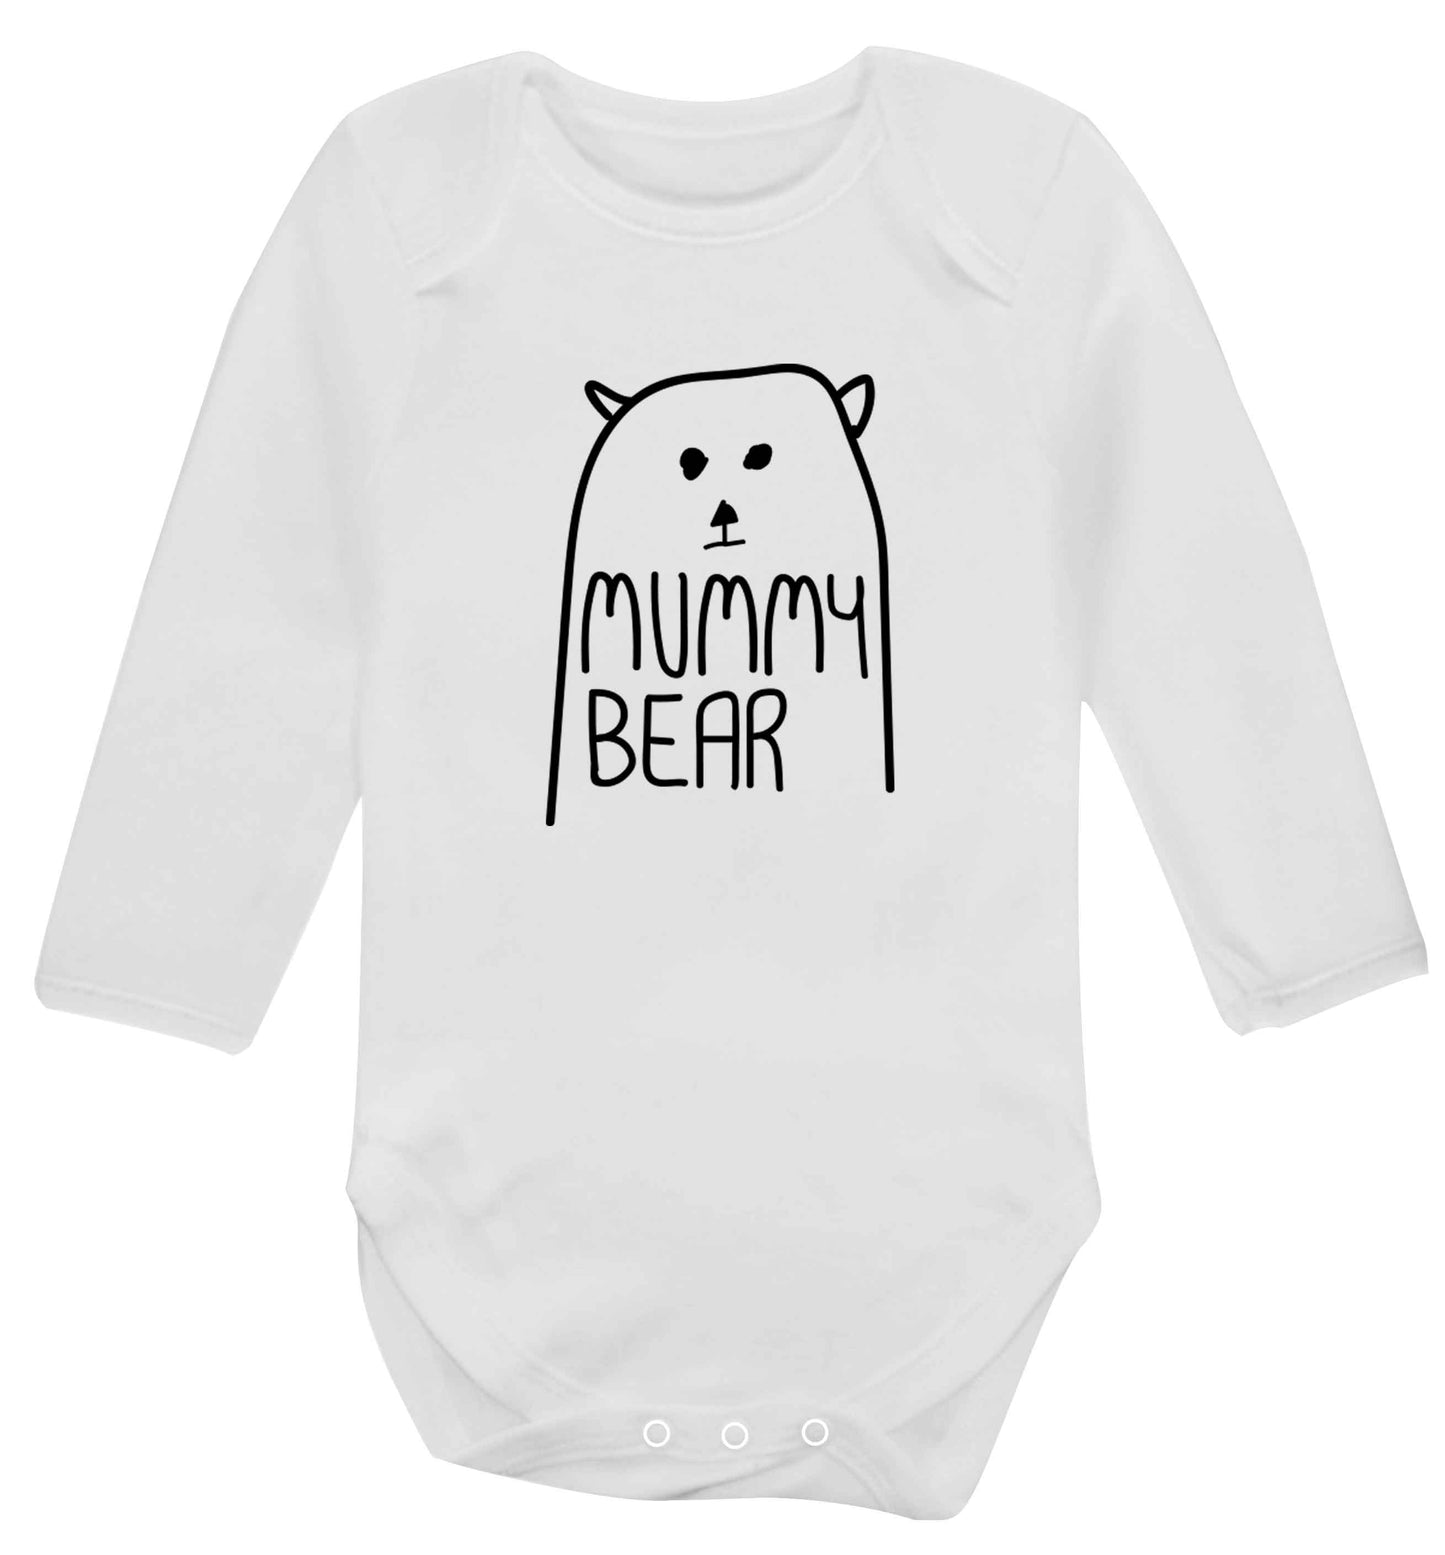 Mummy bear baby vest long sleeved white 6-12 months